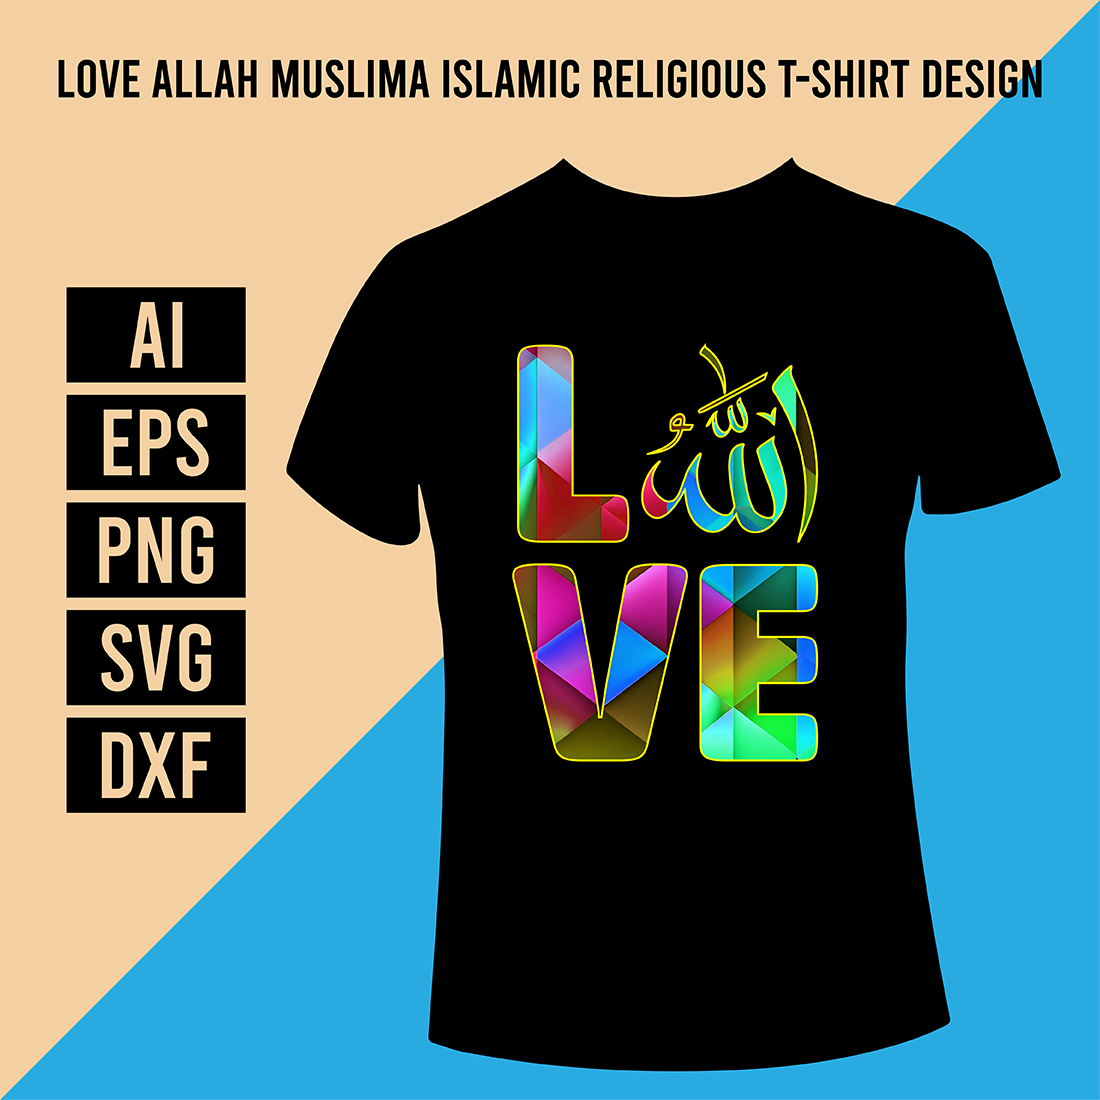 Love Allah Muslima Islamic Religious T-Shirt Design cover image.